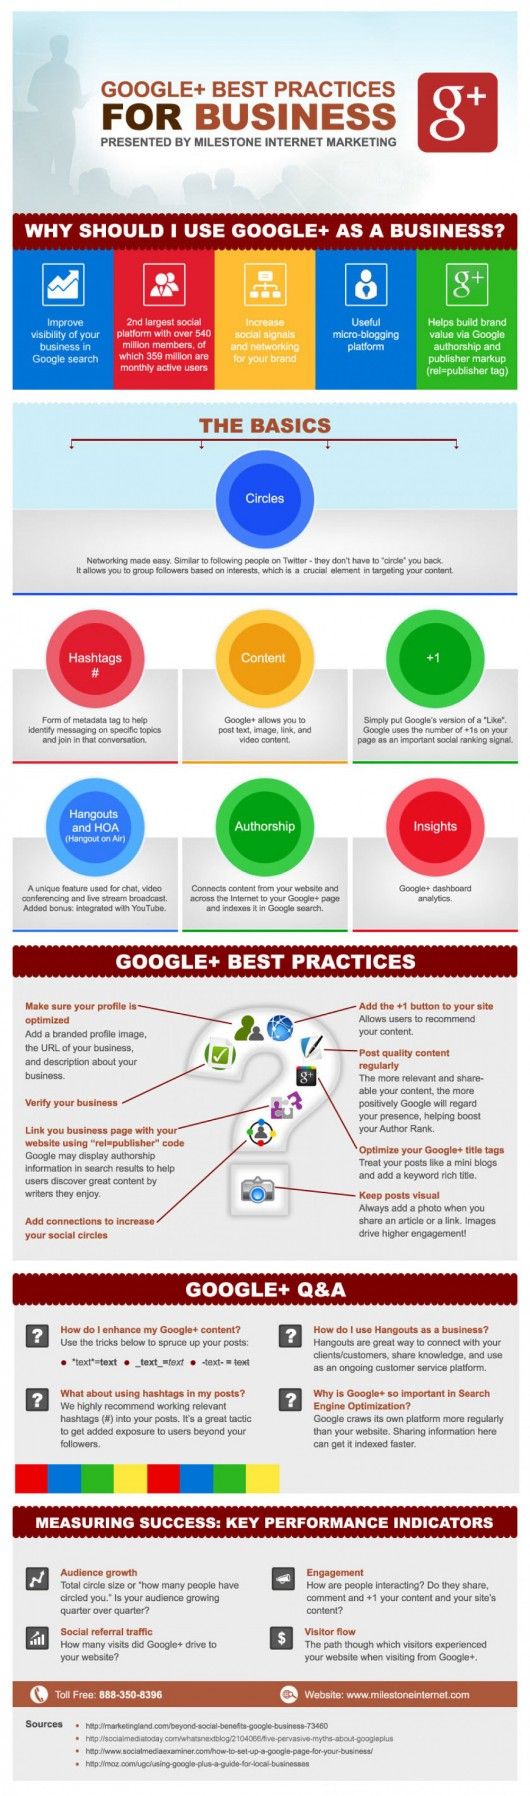 Google+ Best Practices